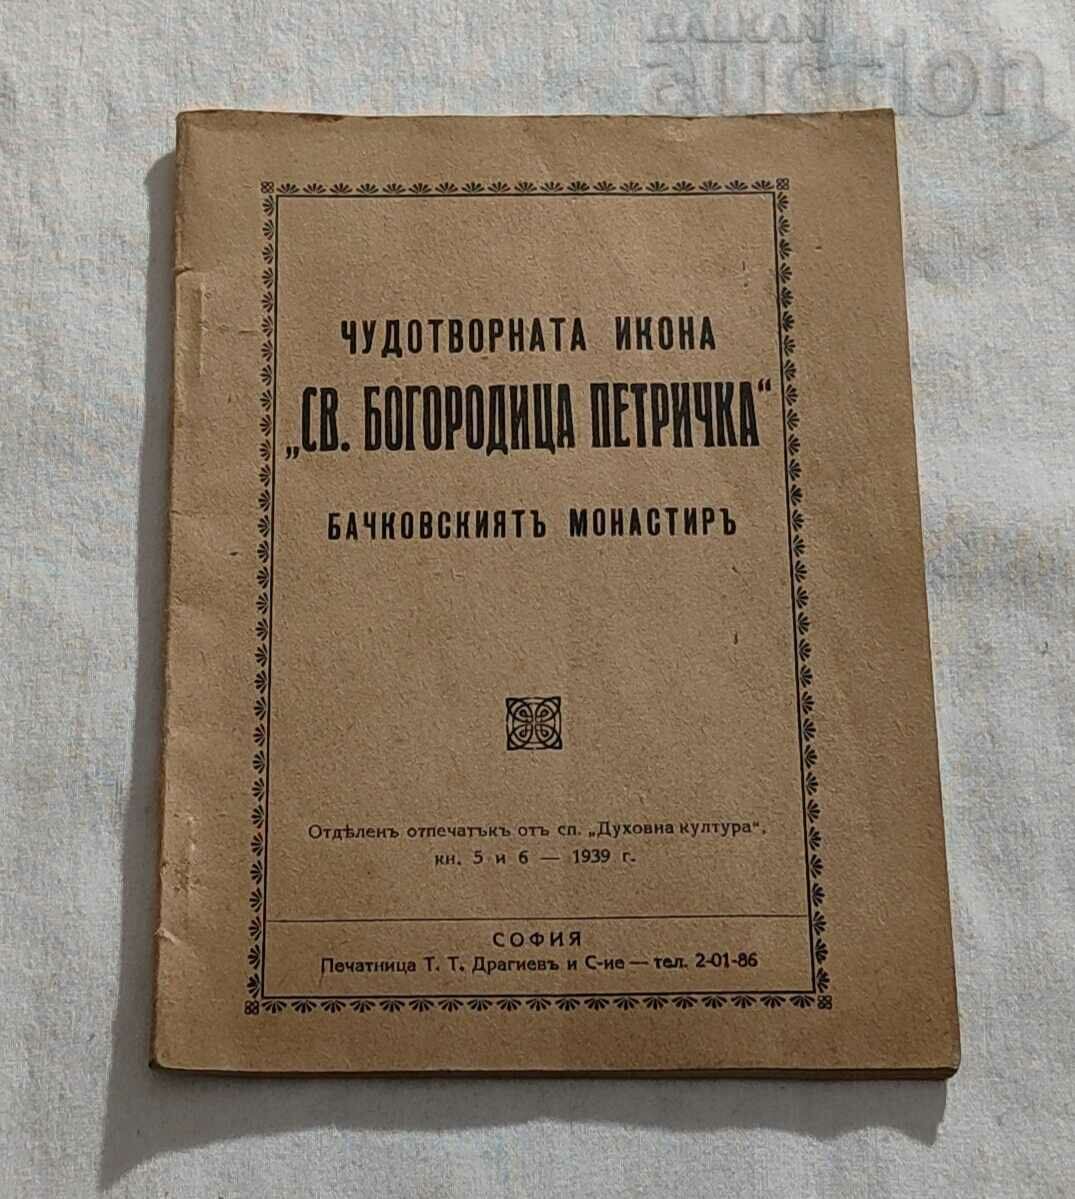 MIRACULOUS ICON "ST. VIRGIN OF PETRICHKA" BACHKOVSKI MA 1939